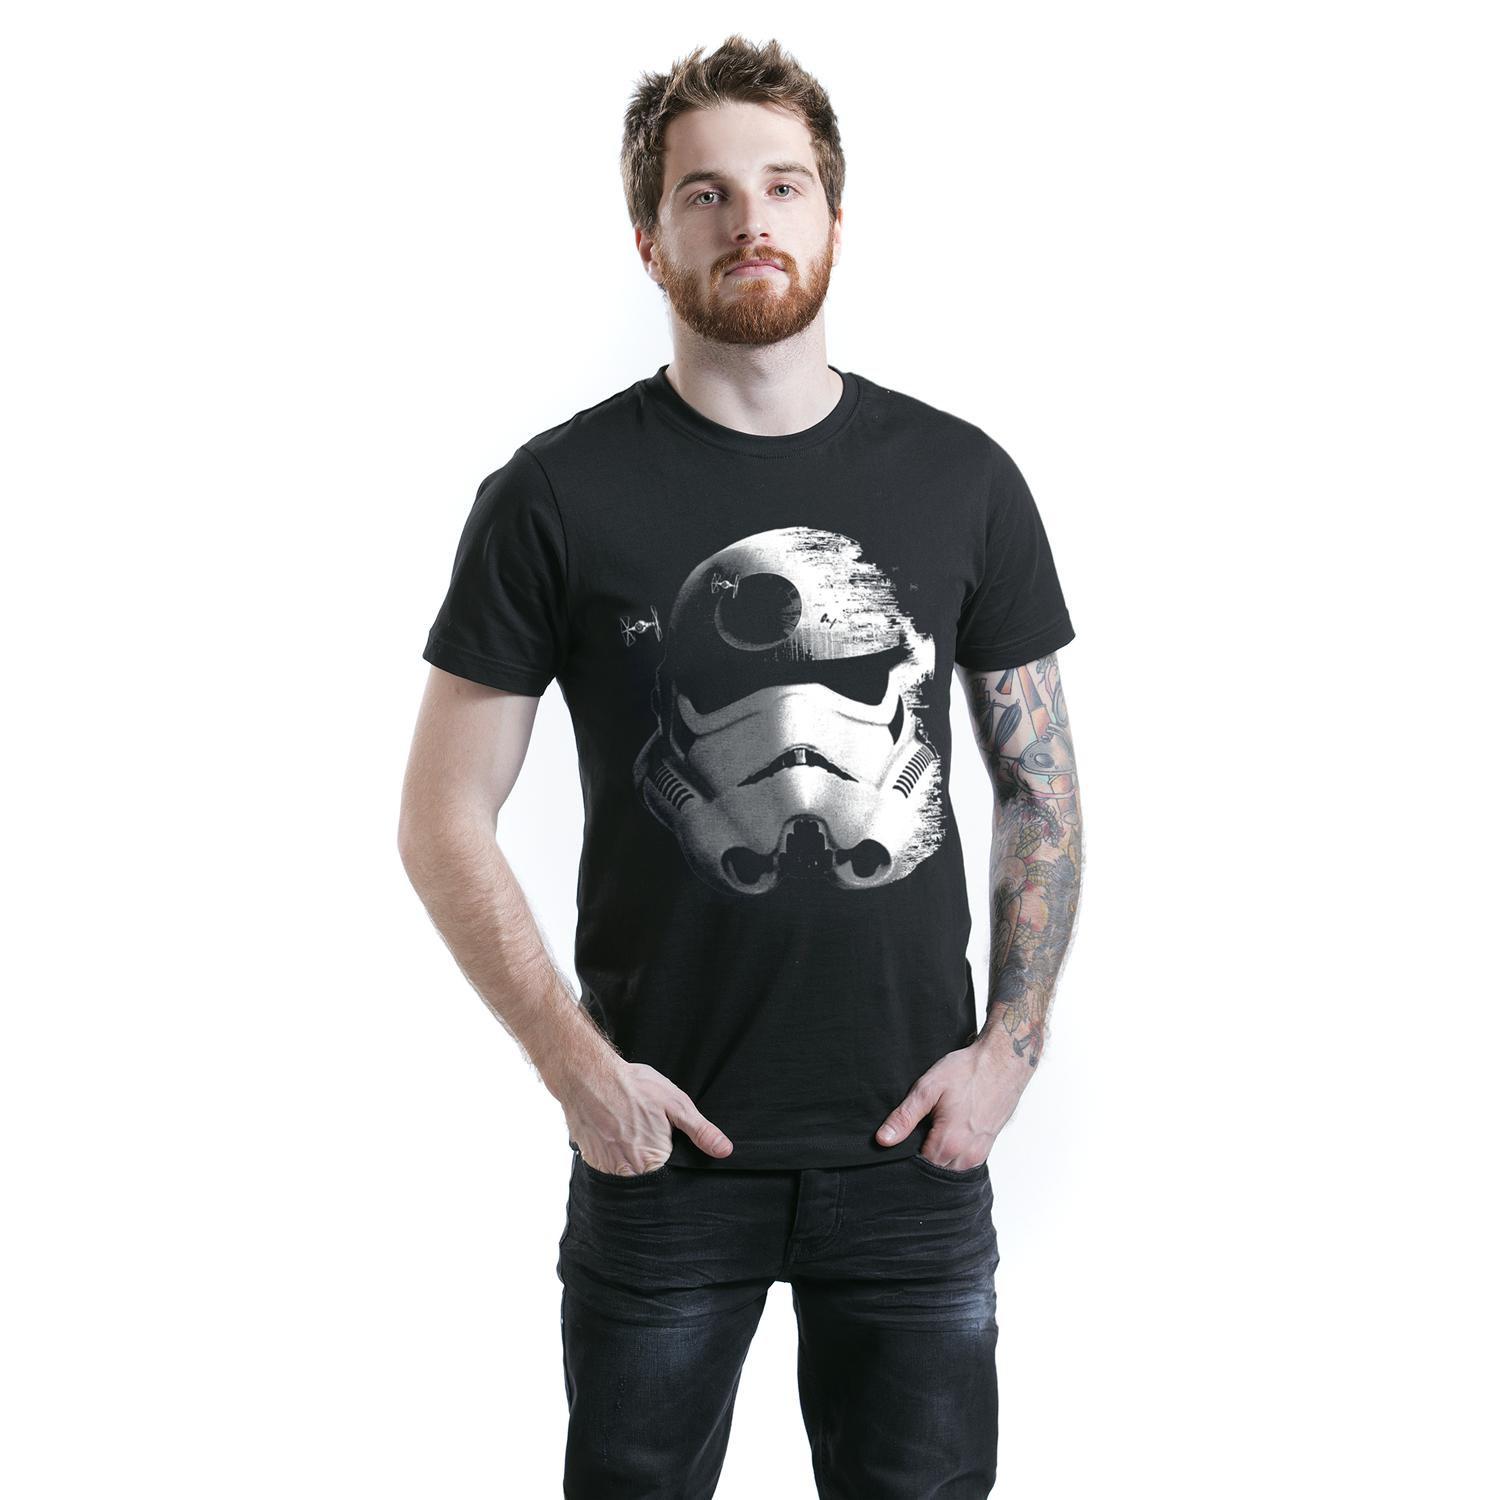 Stormtrooper - Deathstar T-shirt Design man